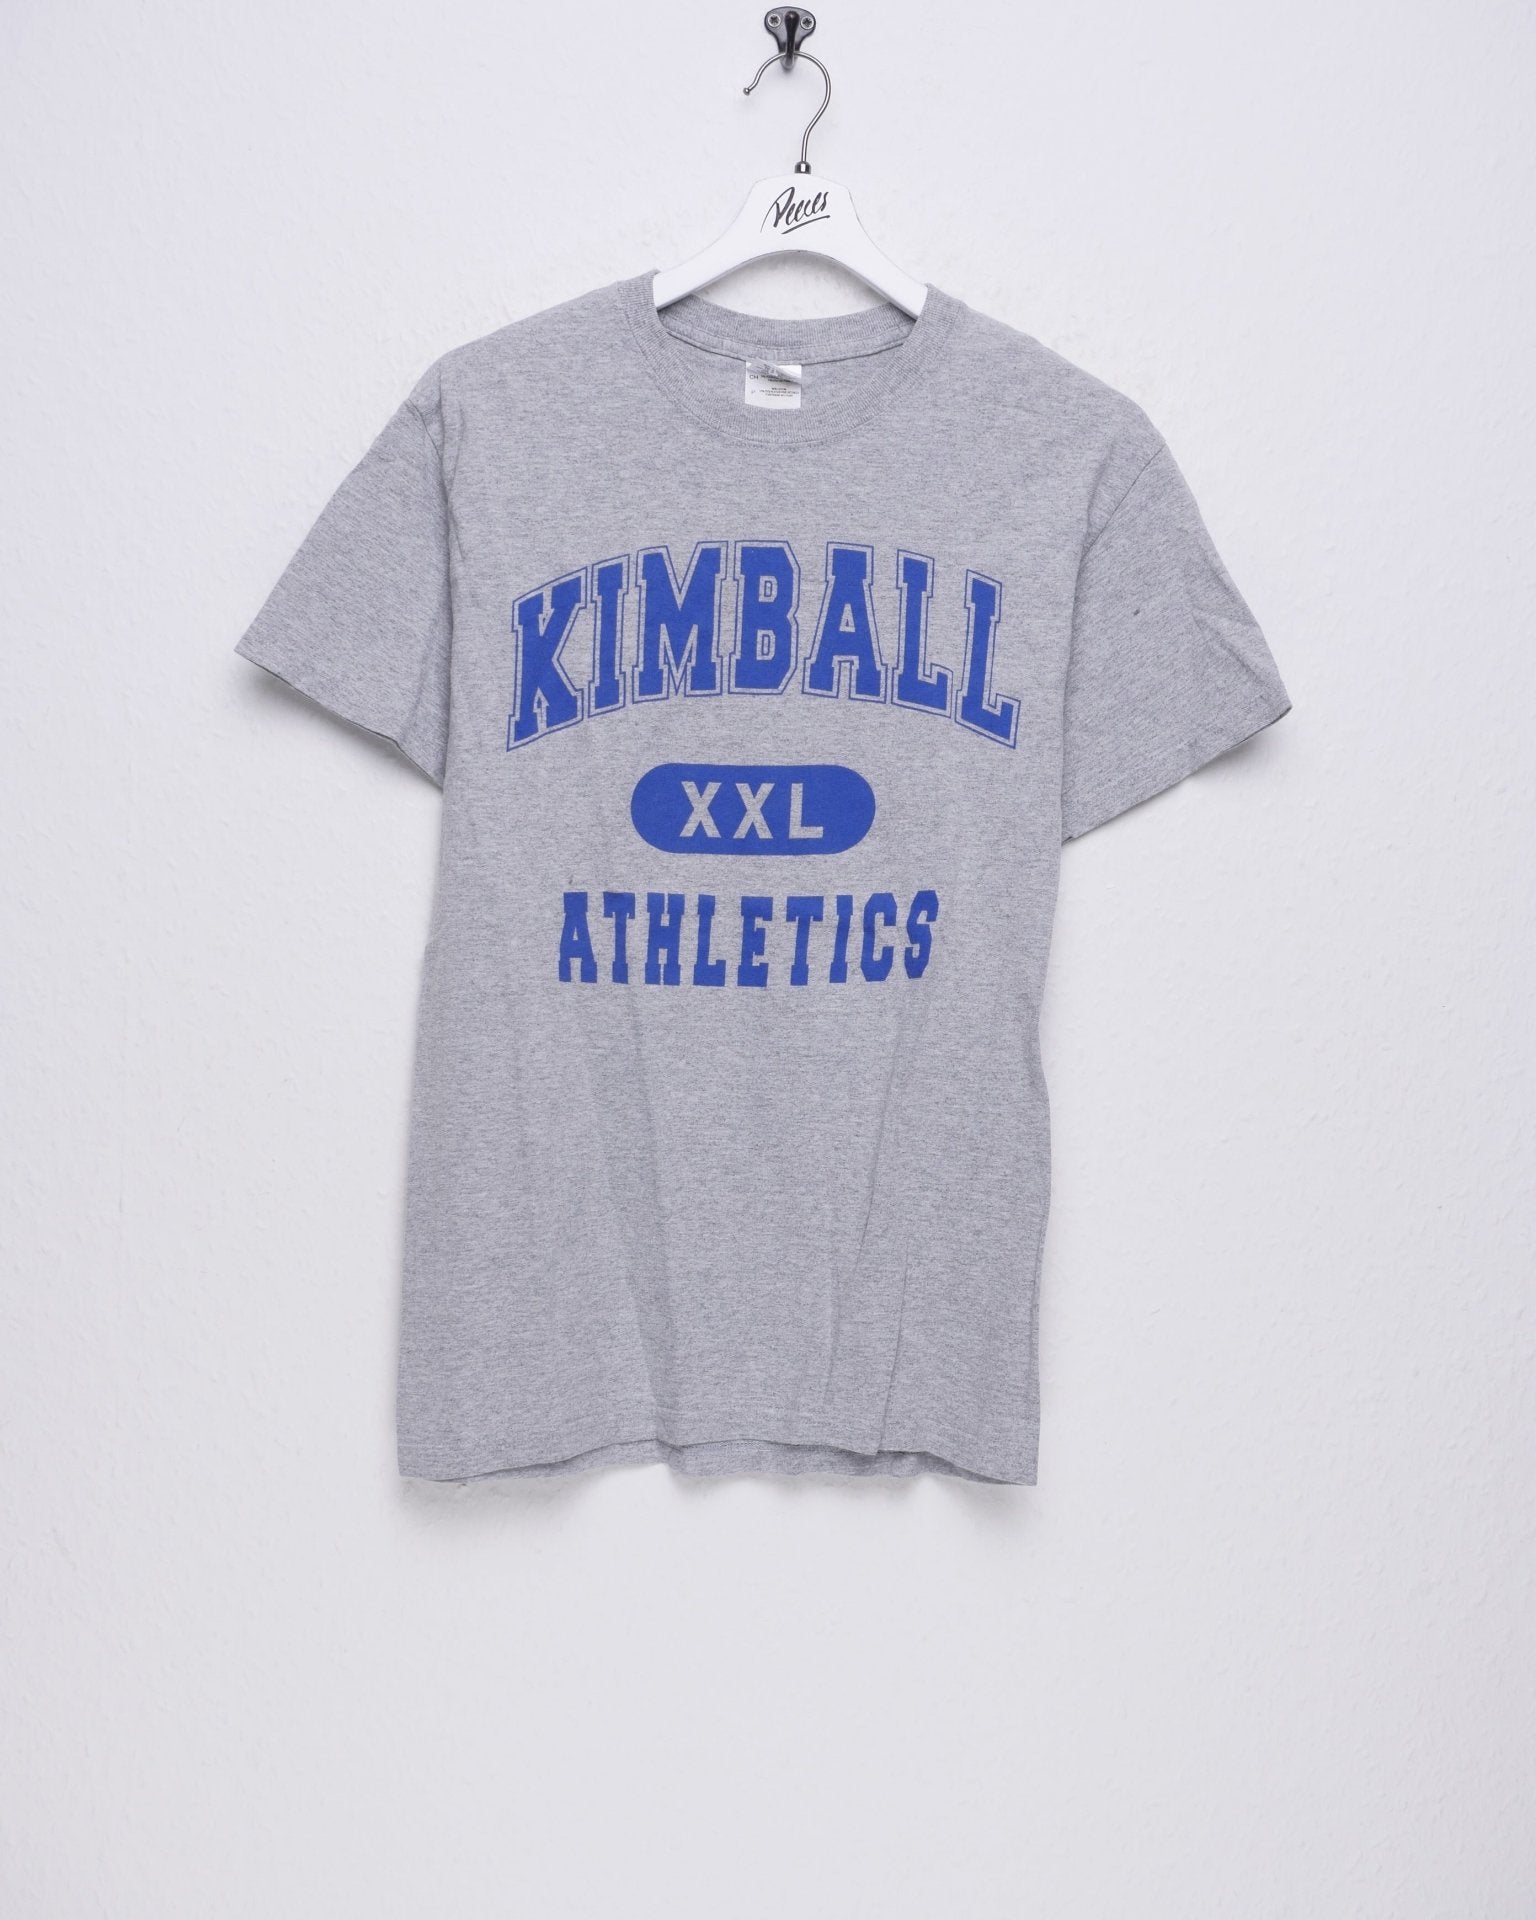 Kimball Athletics printed Logo Shirt - Peeces